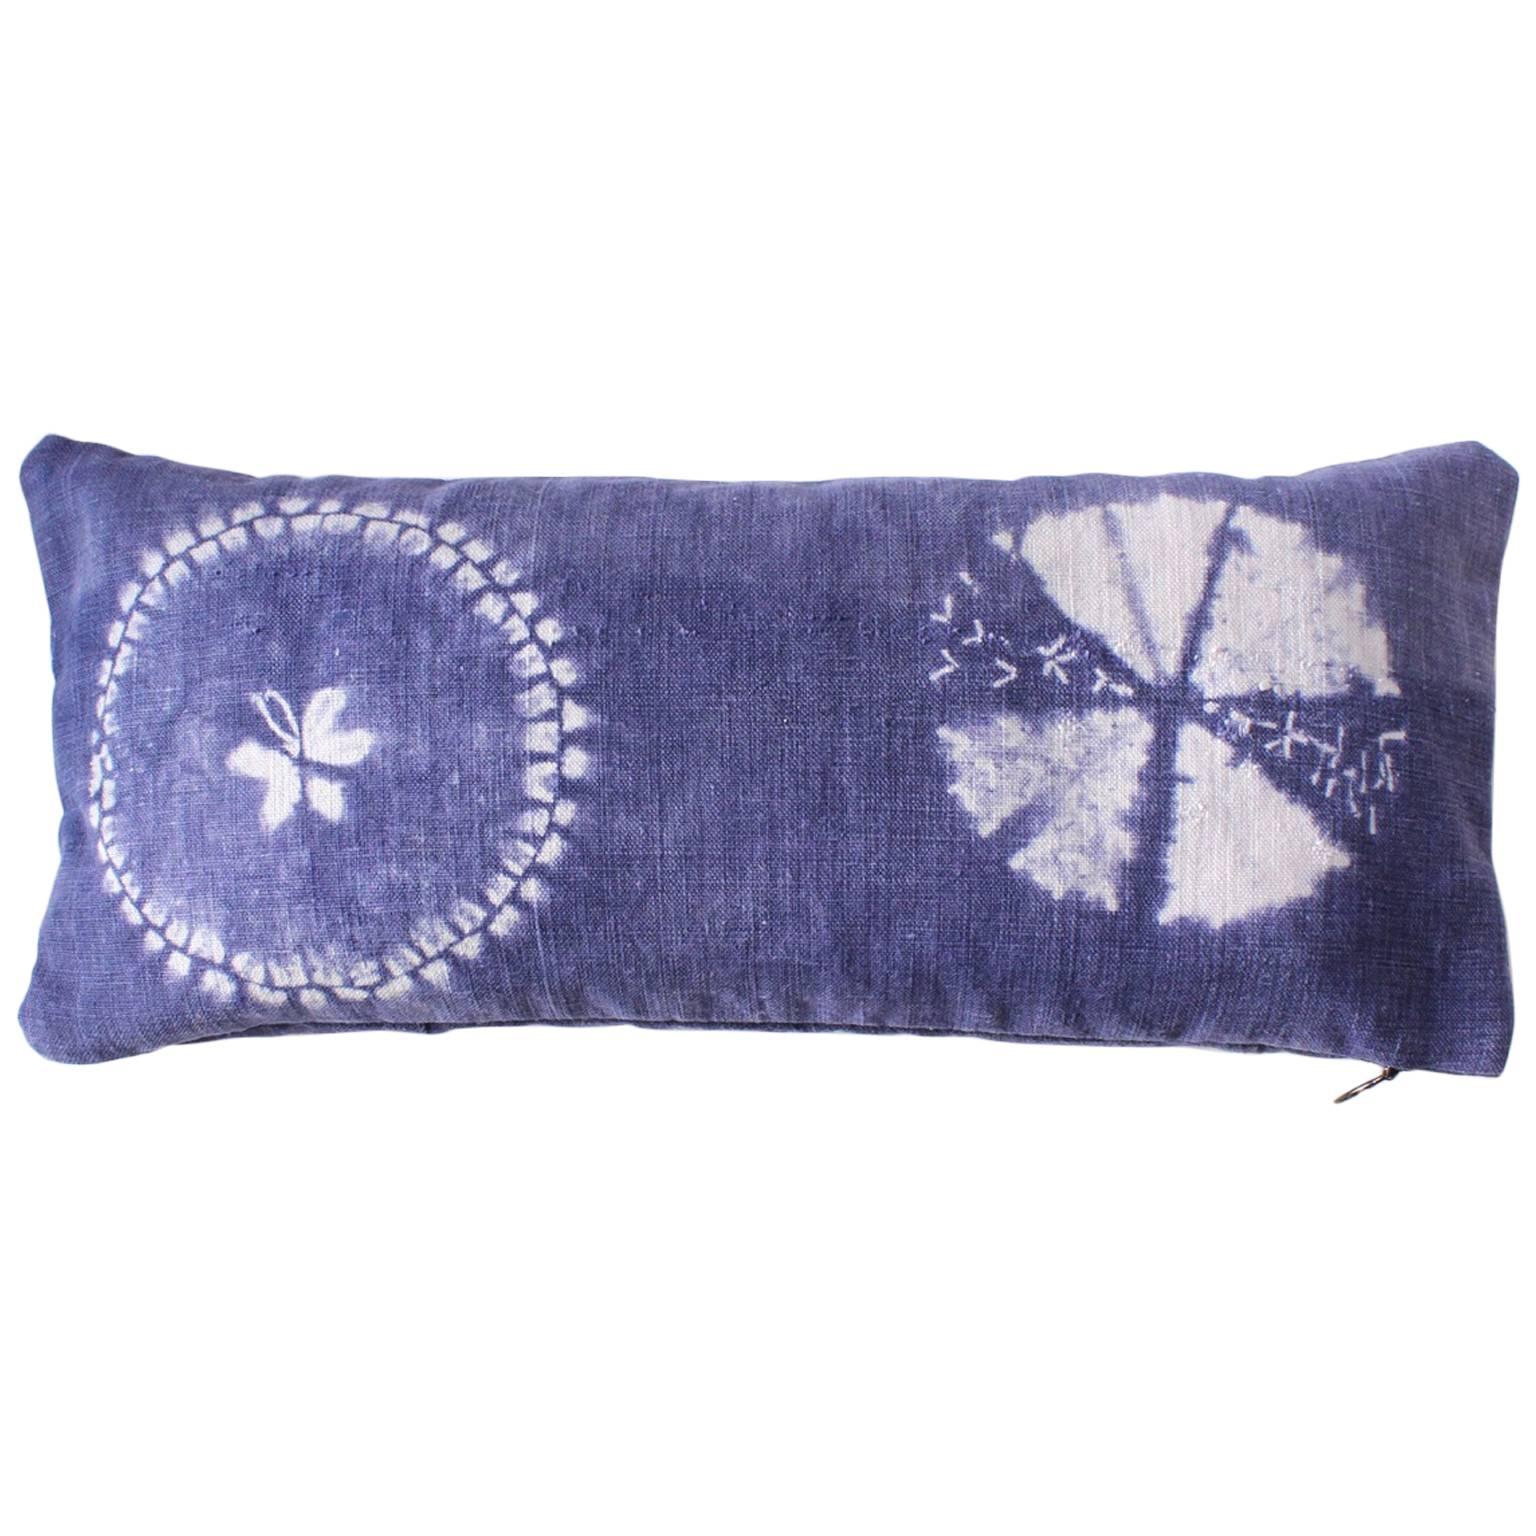 Antique Resist Dye Indigo Pillow, Small Lumbar Scented For Sale